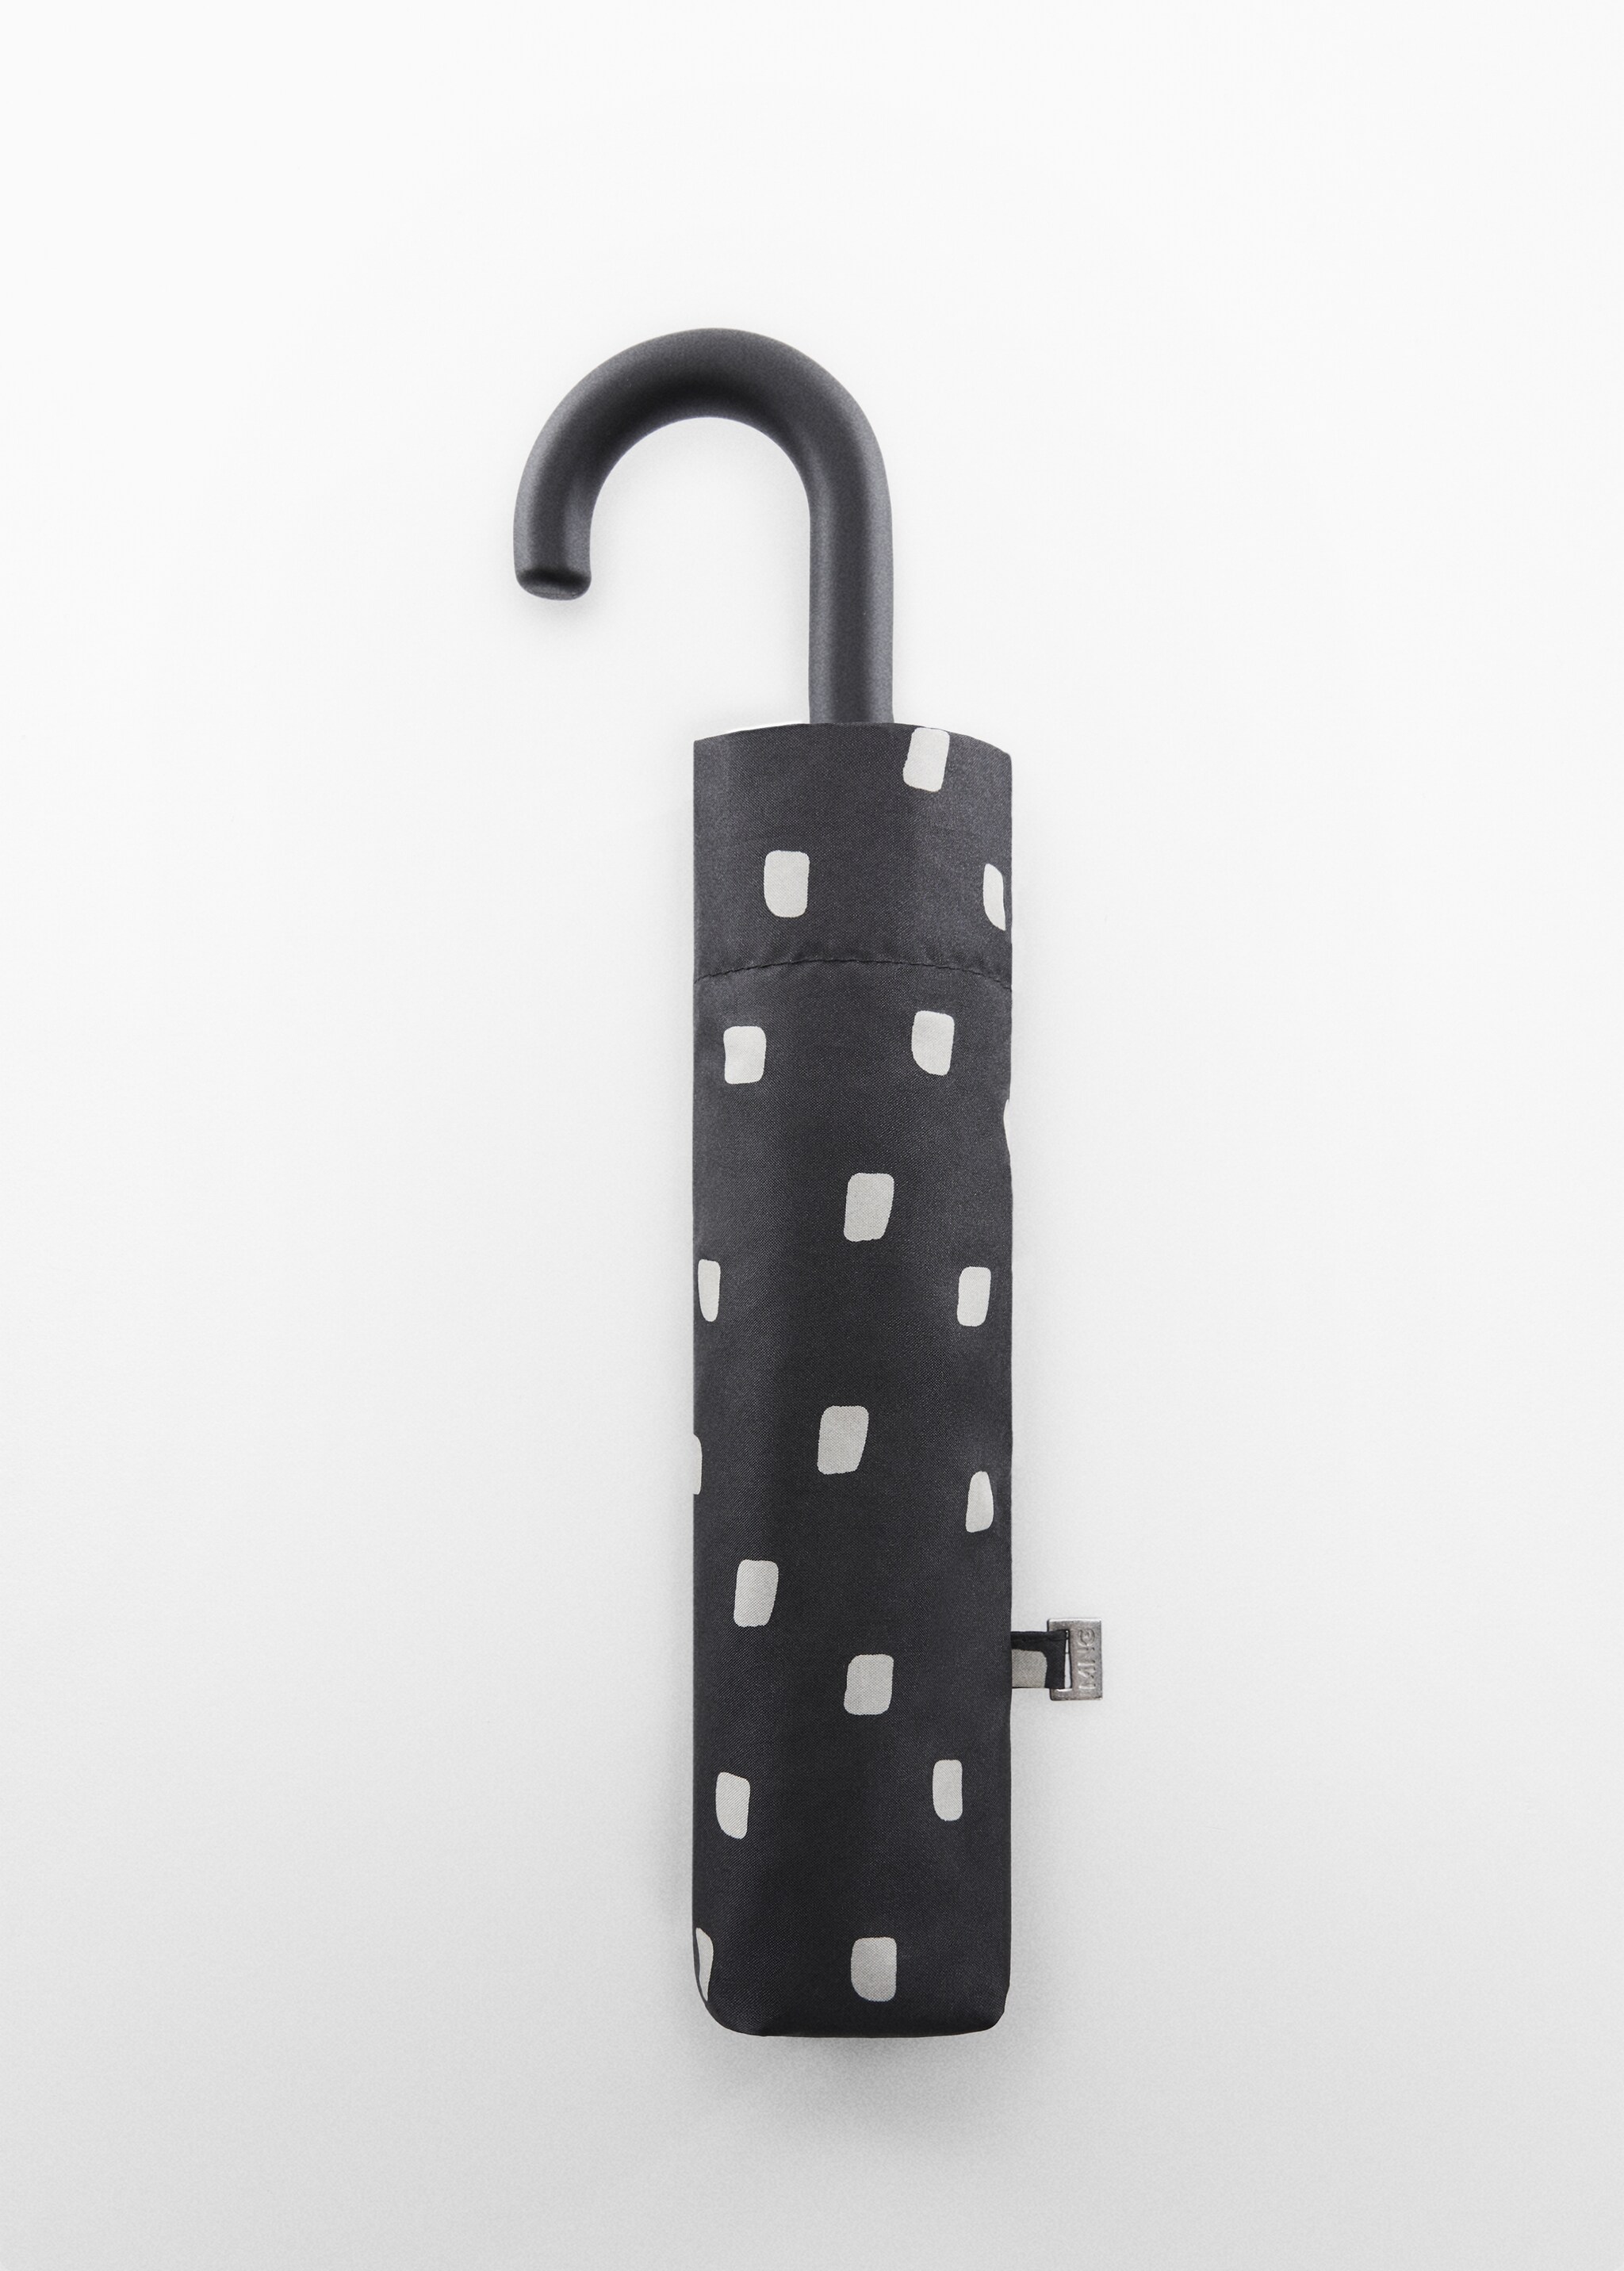 Polka-dot folding umbrella - Article without model